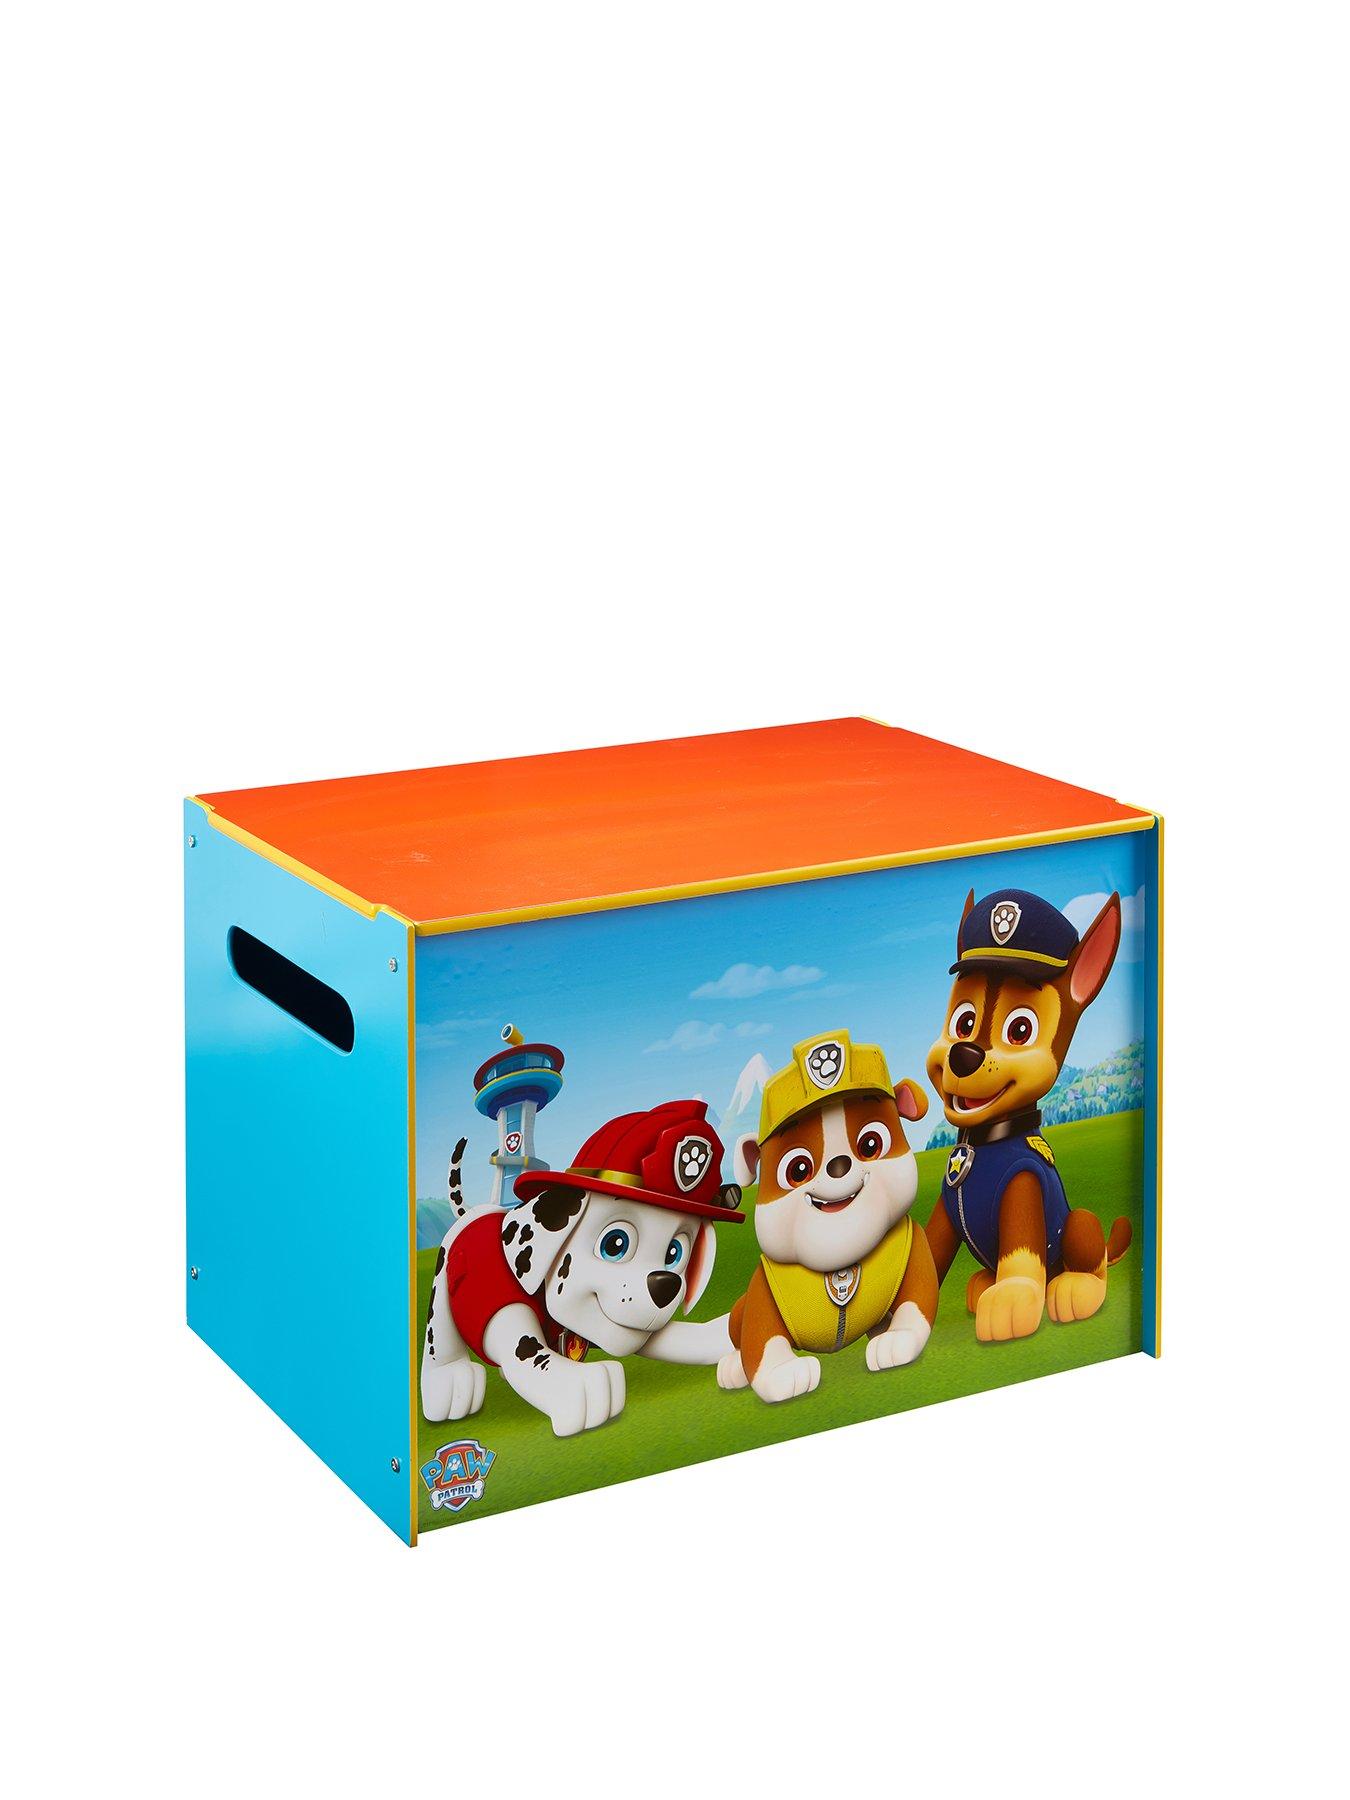 gruffalo toy box